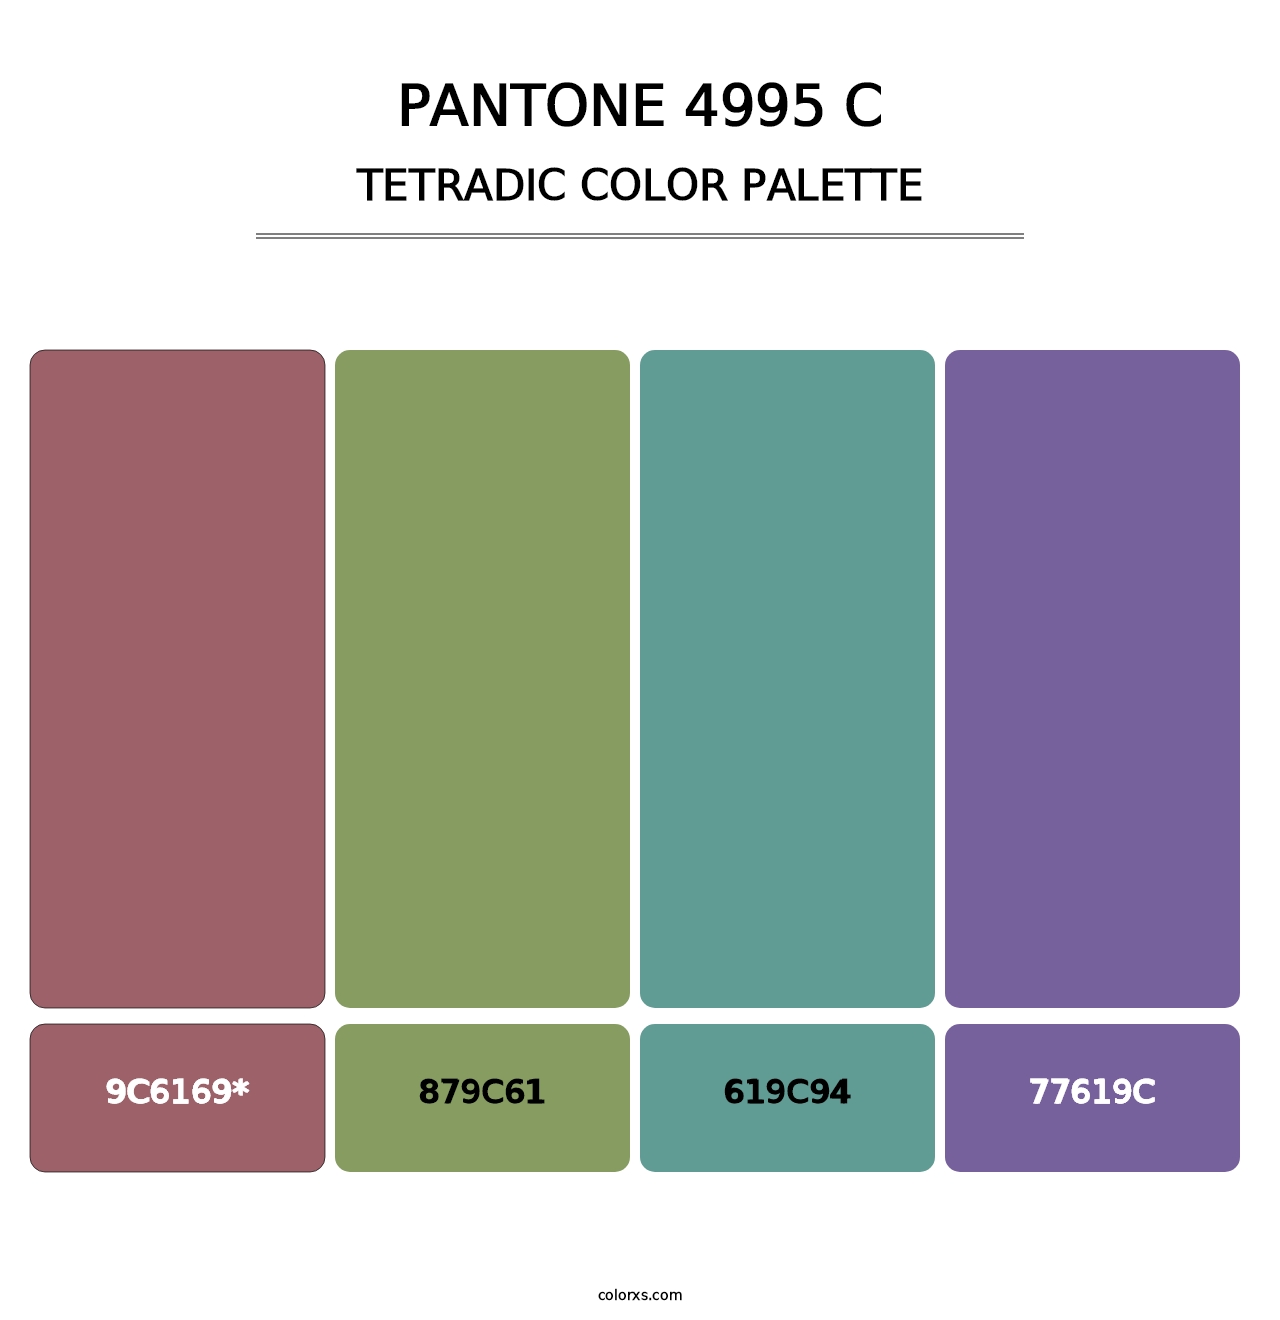 PANTONE 4995 C - Tetradic Color Palette